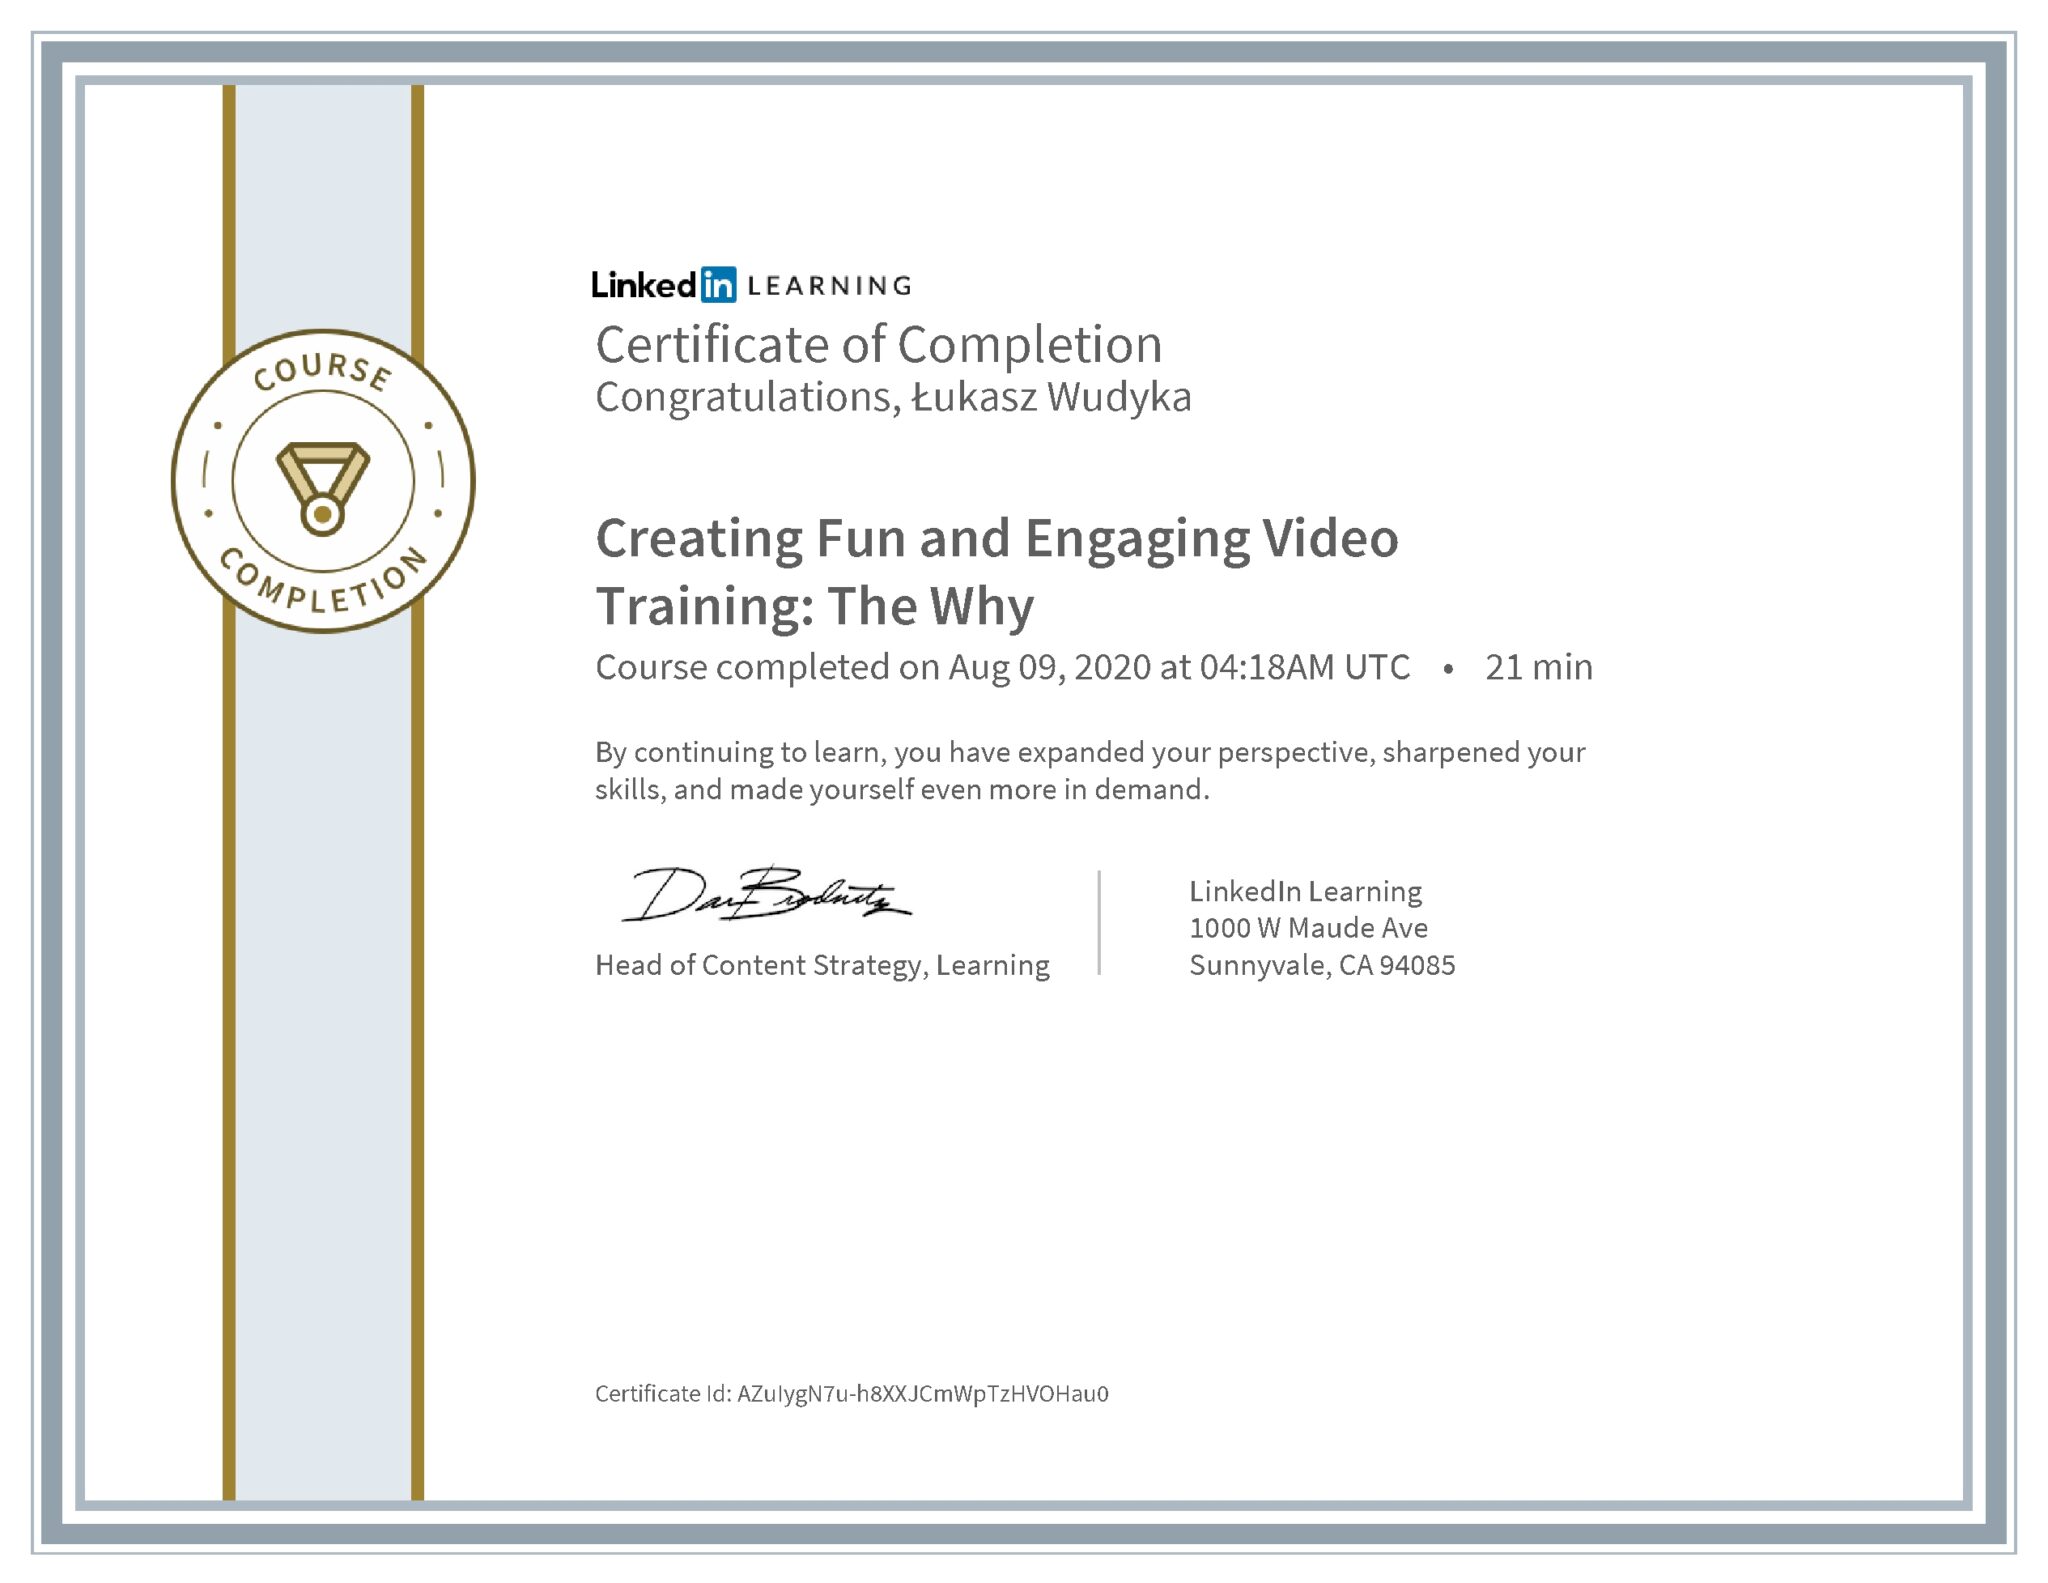 Łukasz Wudyka certyfikat LinkedIn Creating Fun and Engaging Video Training: The Why